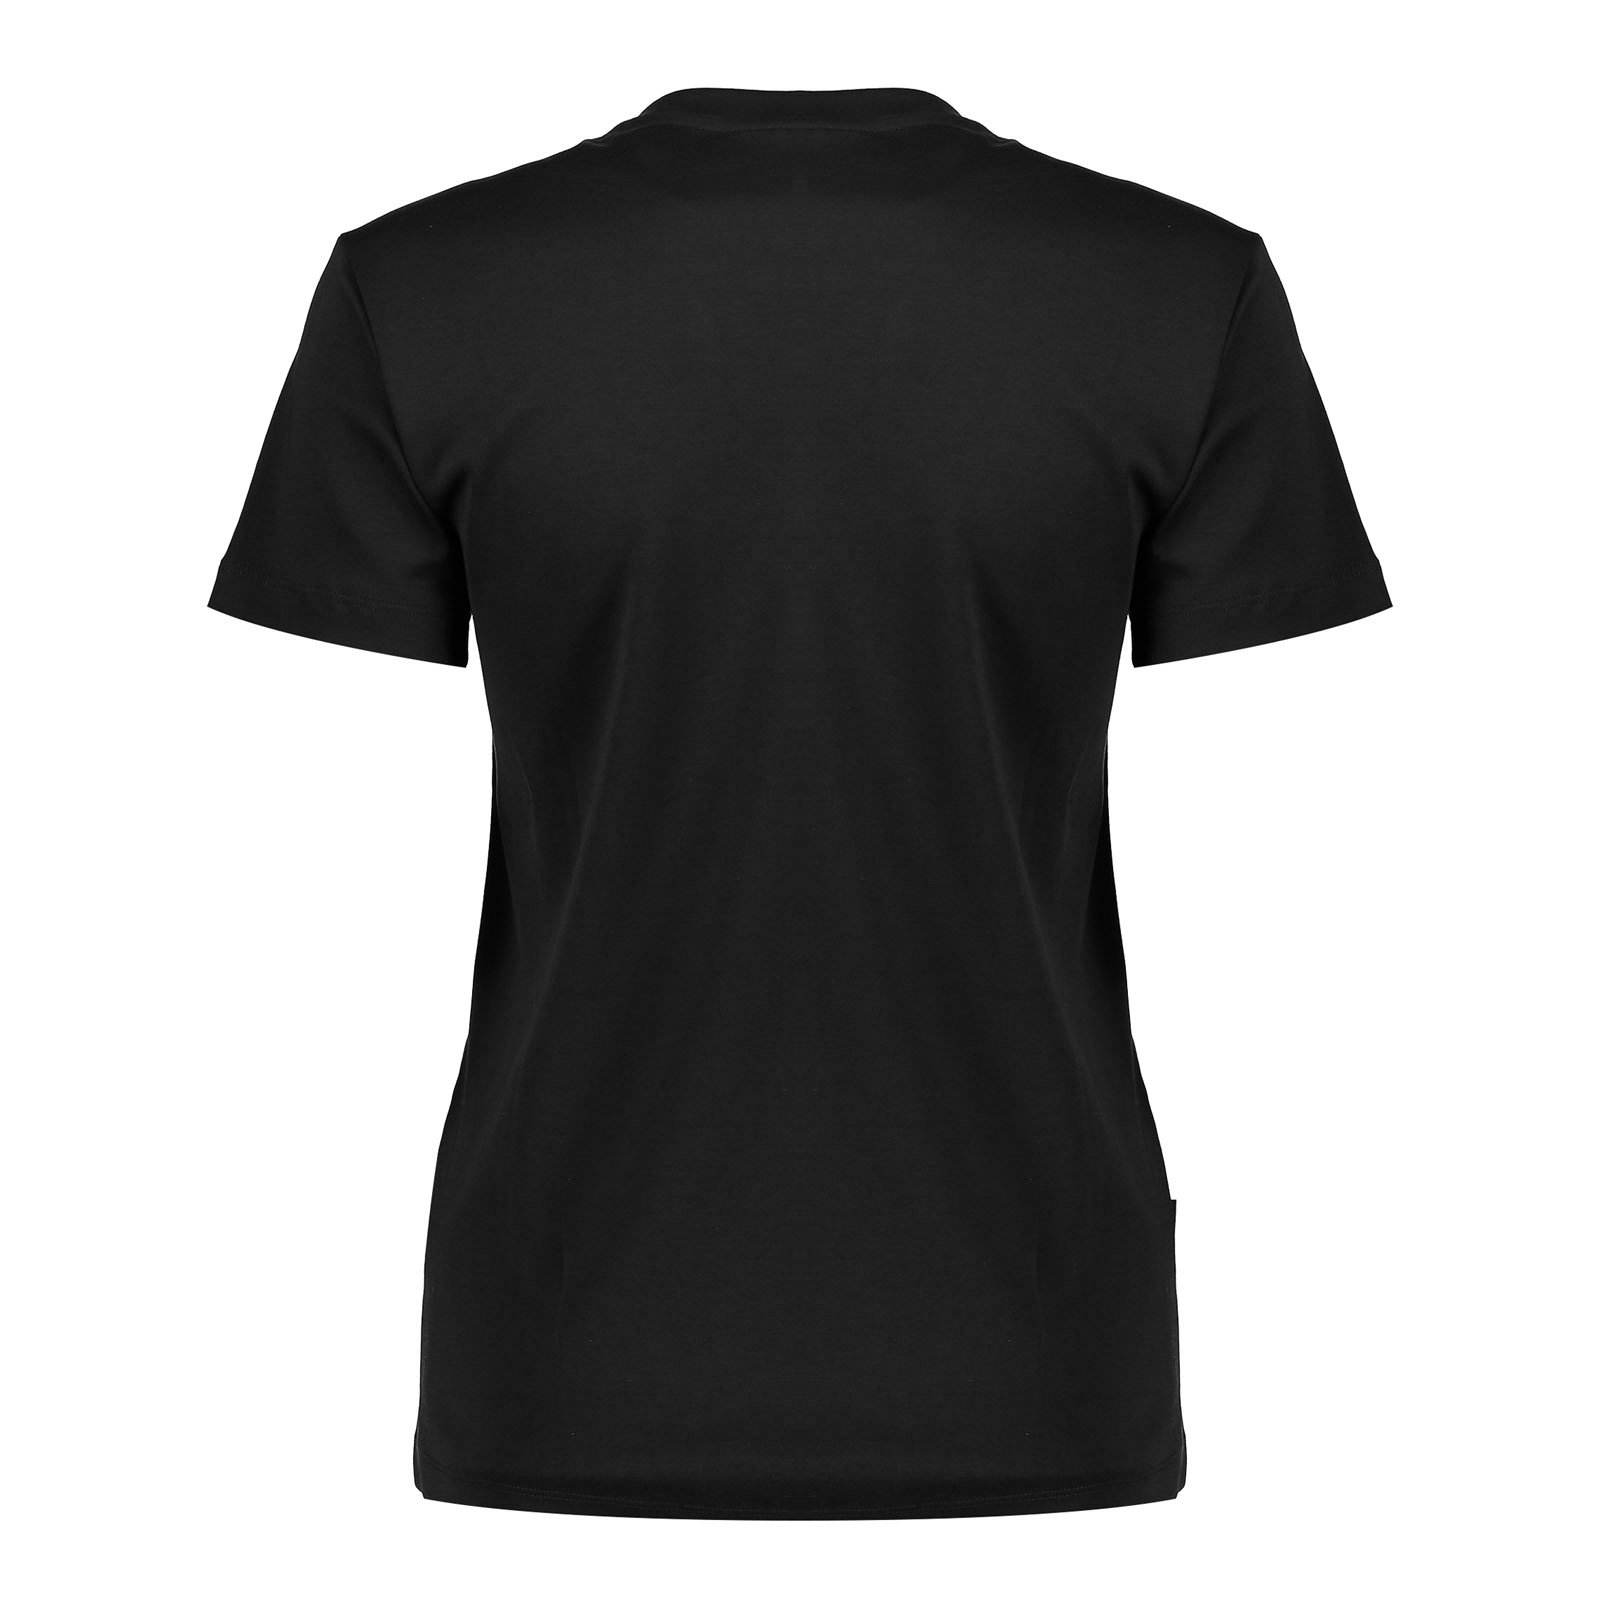 O OO Black T-shirt Women - Do Goods® 